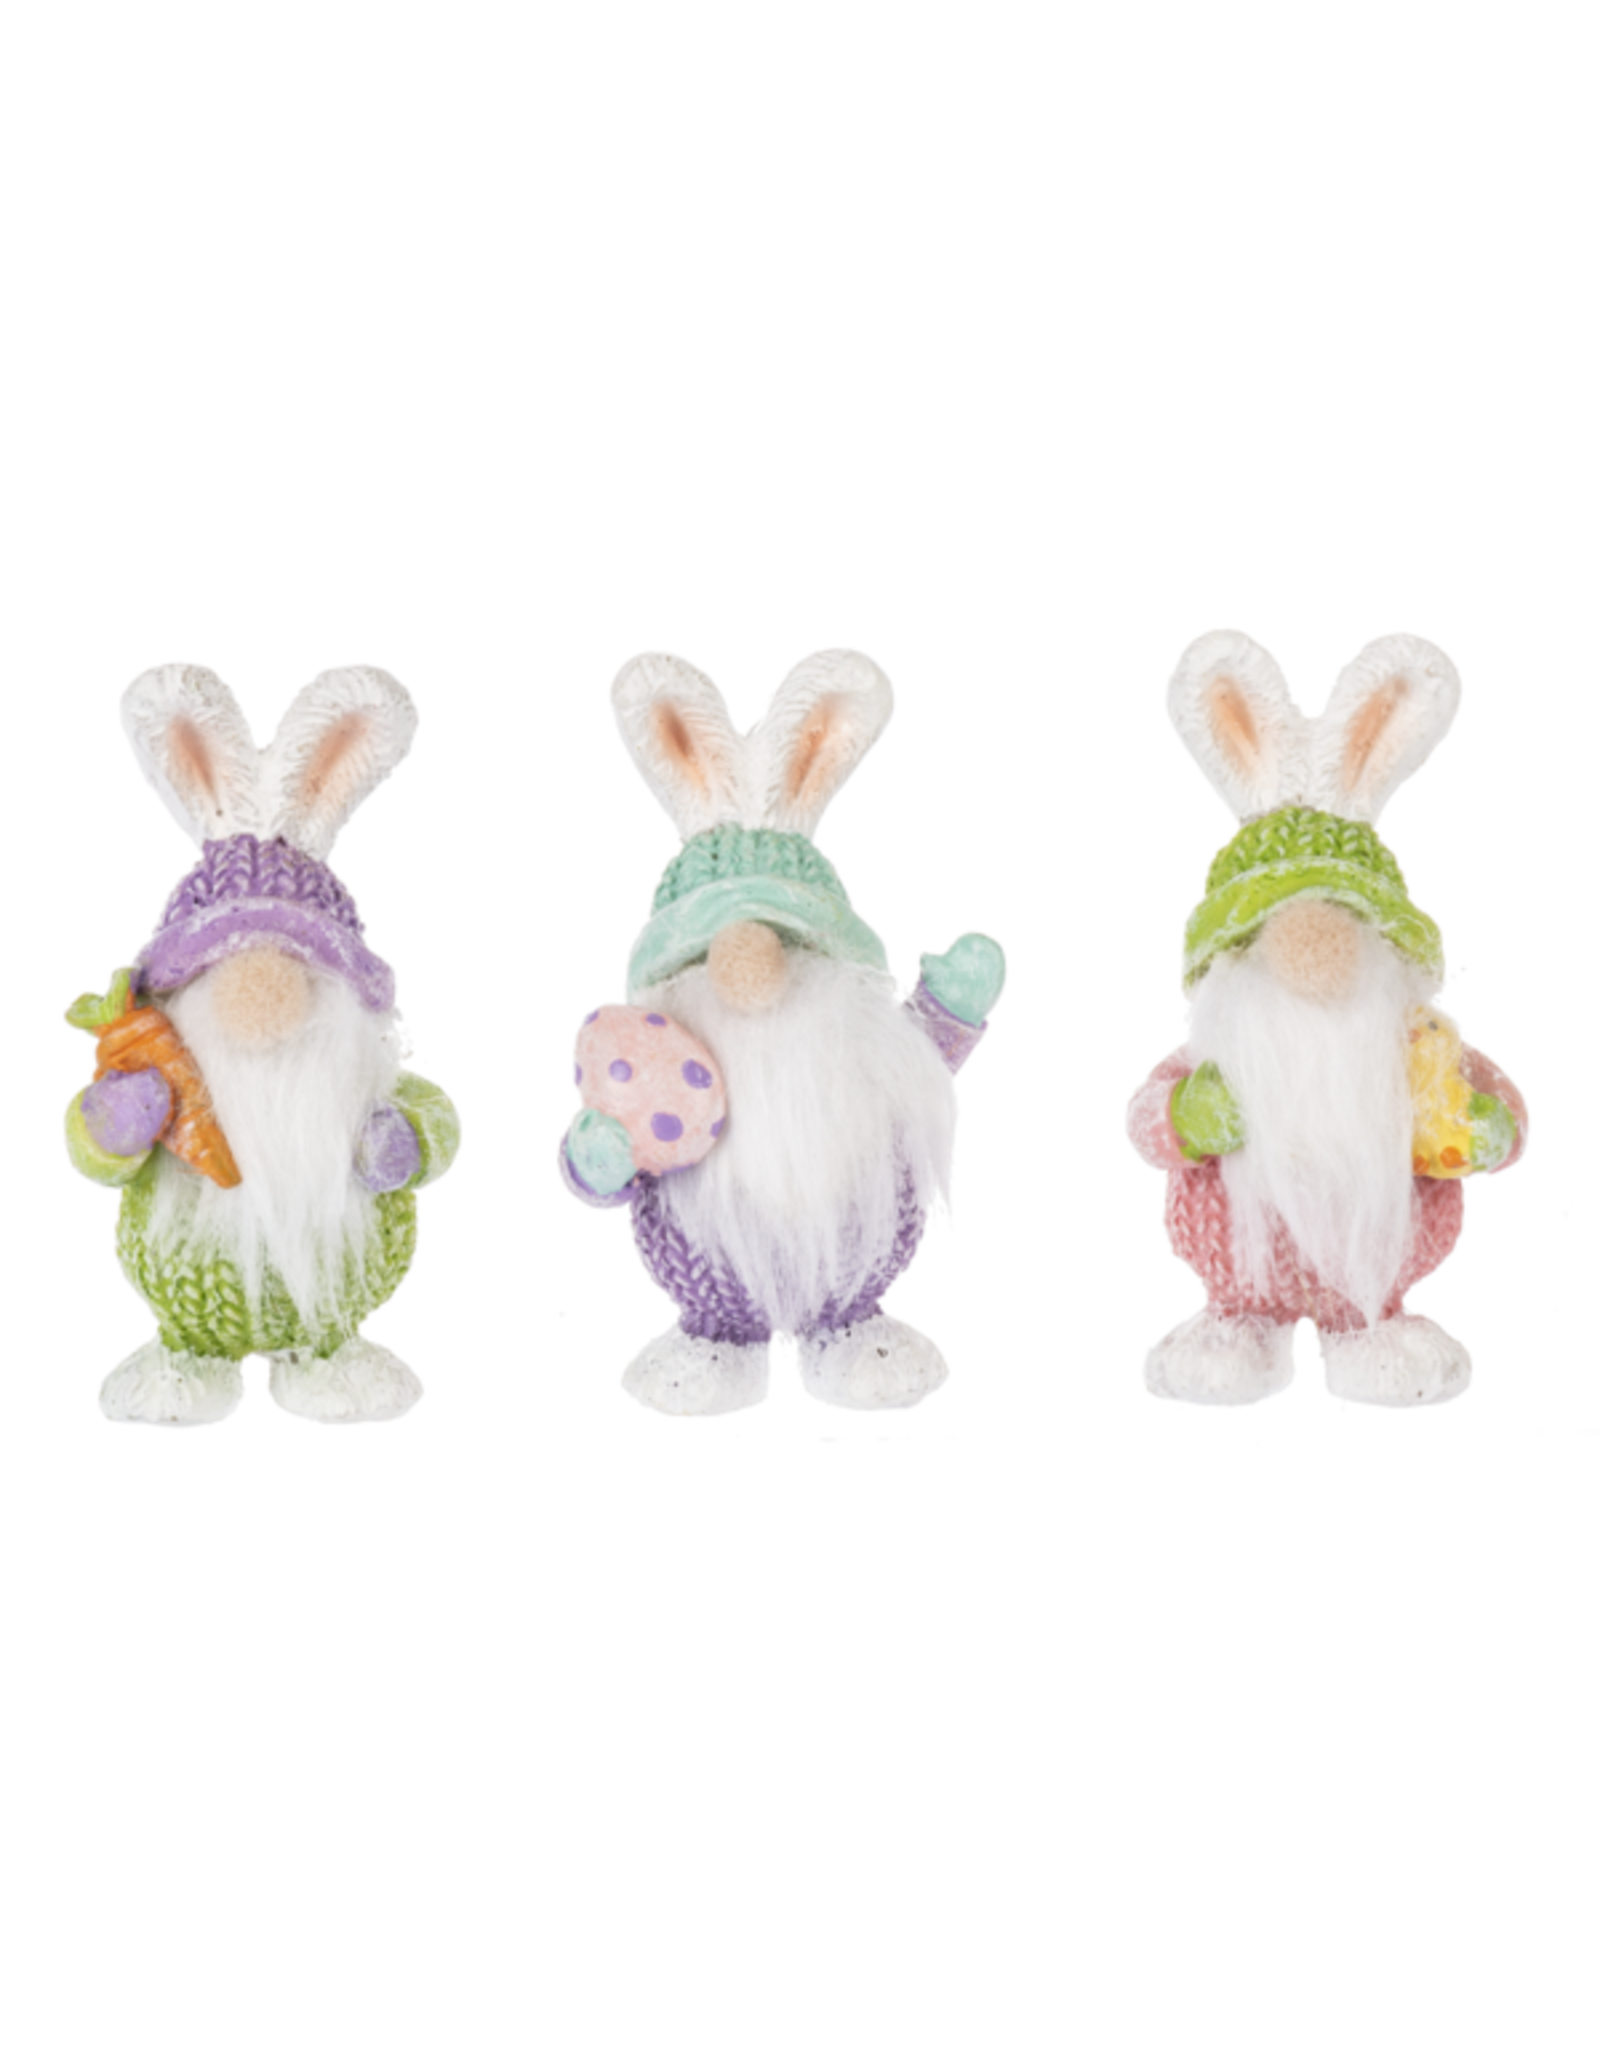 Ganz Bunny Gnomes Assorted Pocket Charms